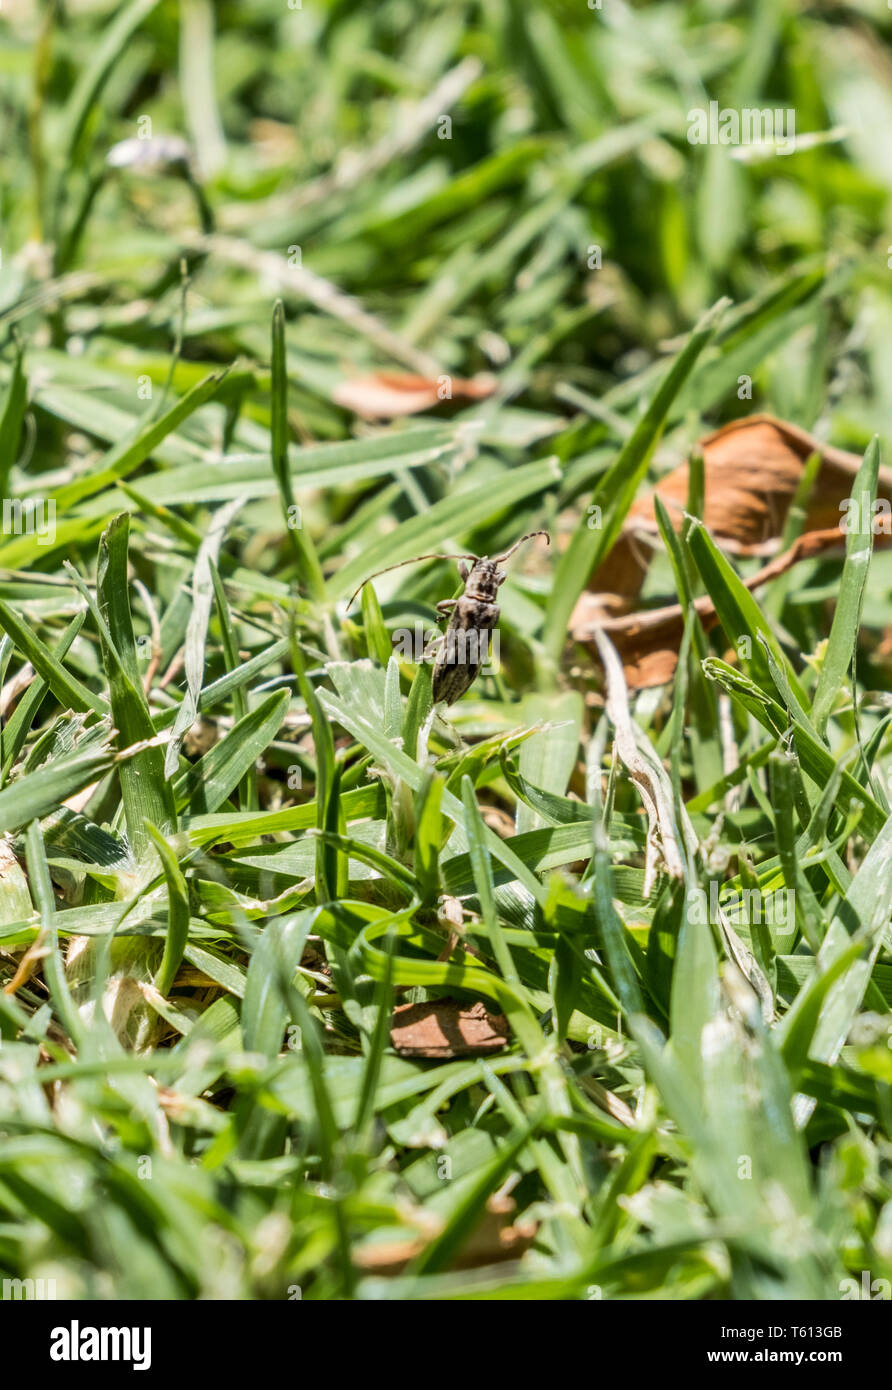 Longicorn beetle climbing grass stalk Stock Photo